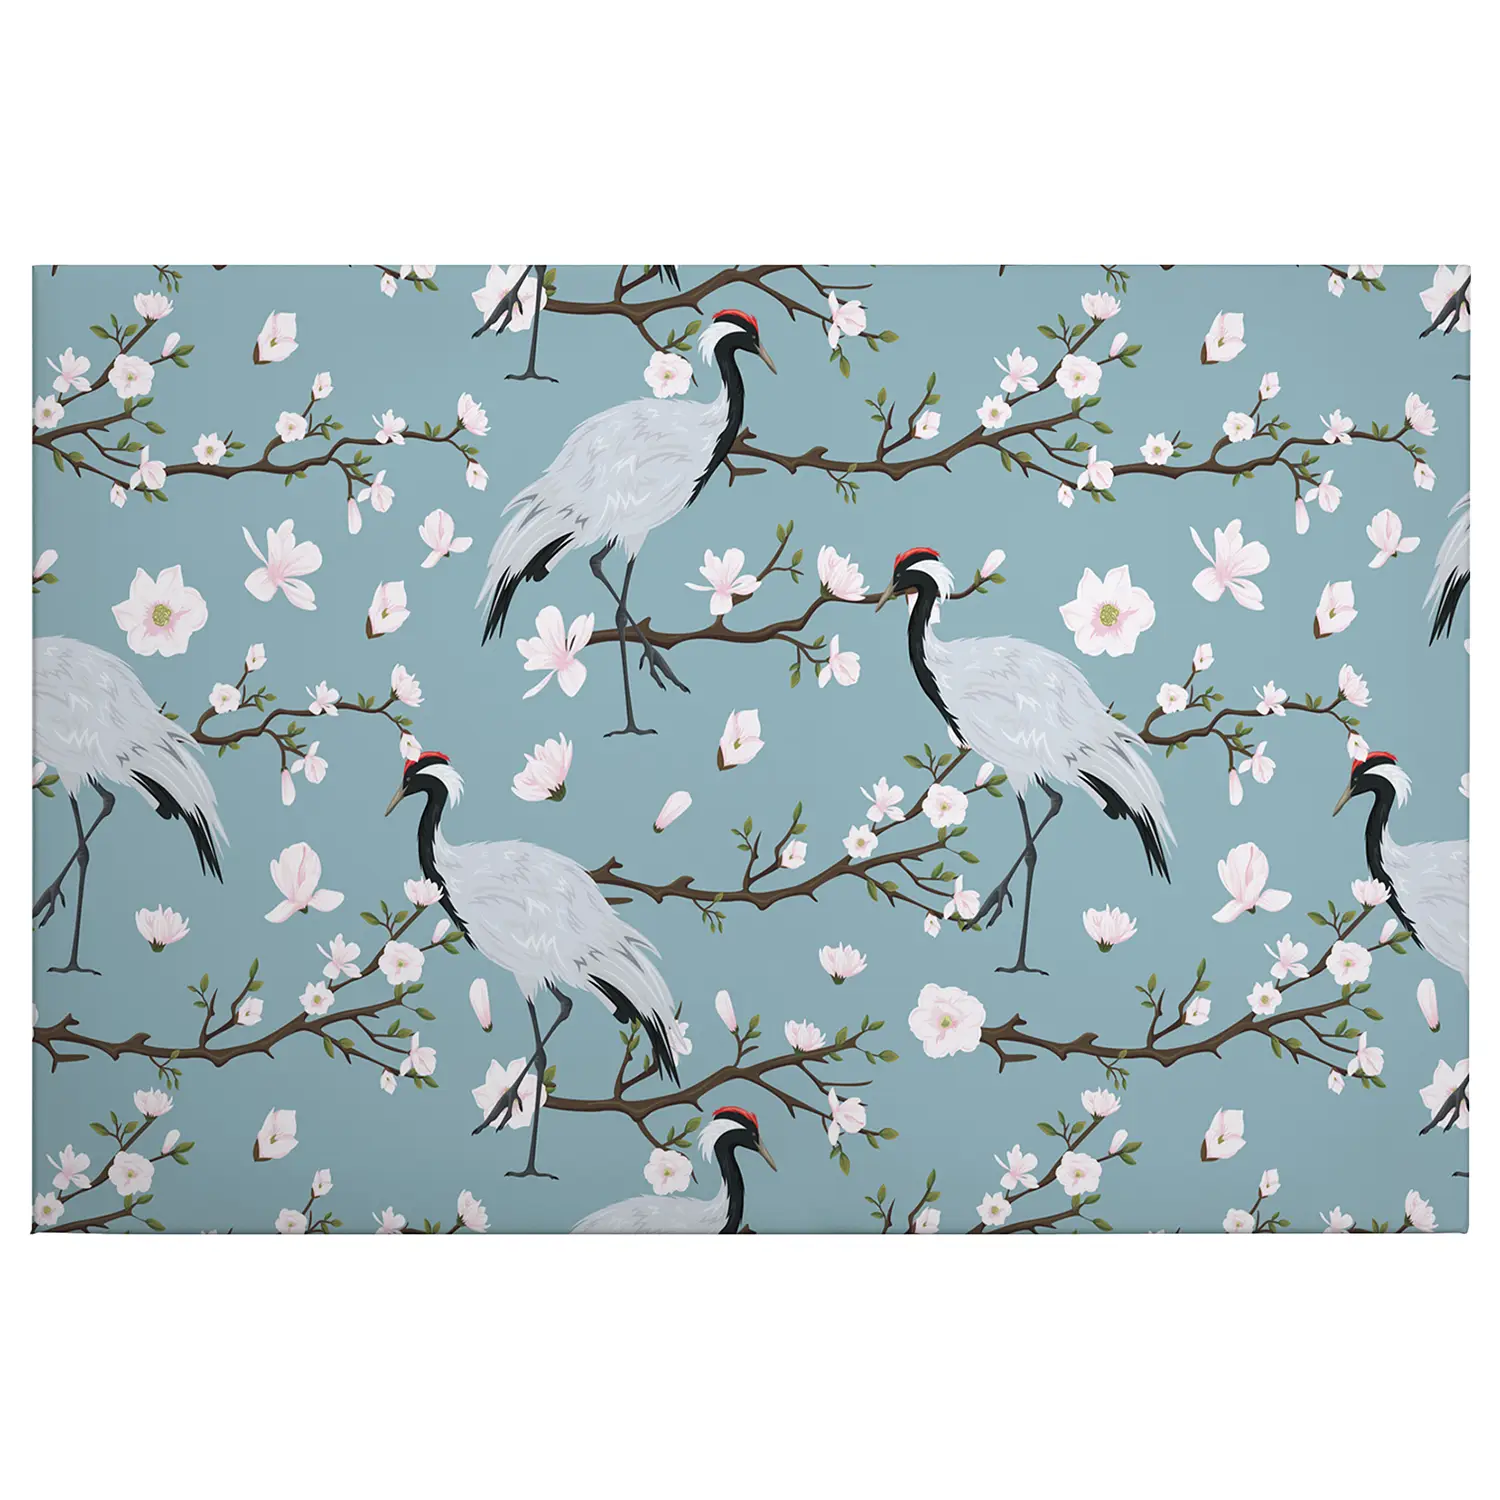 Japanese Cranes Wandbild